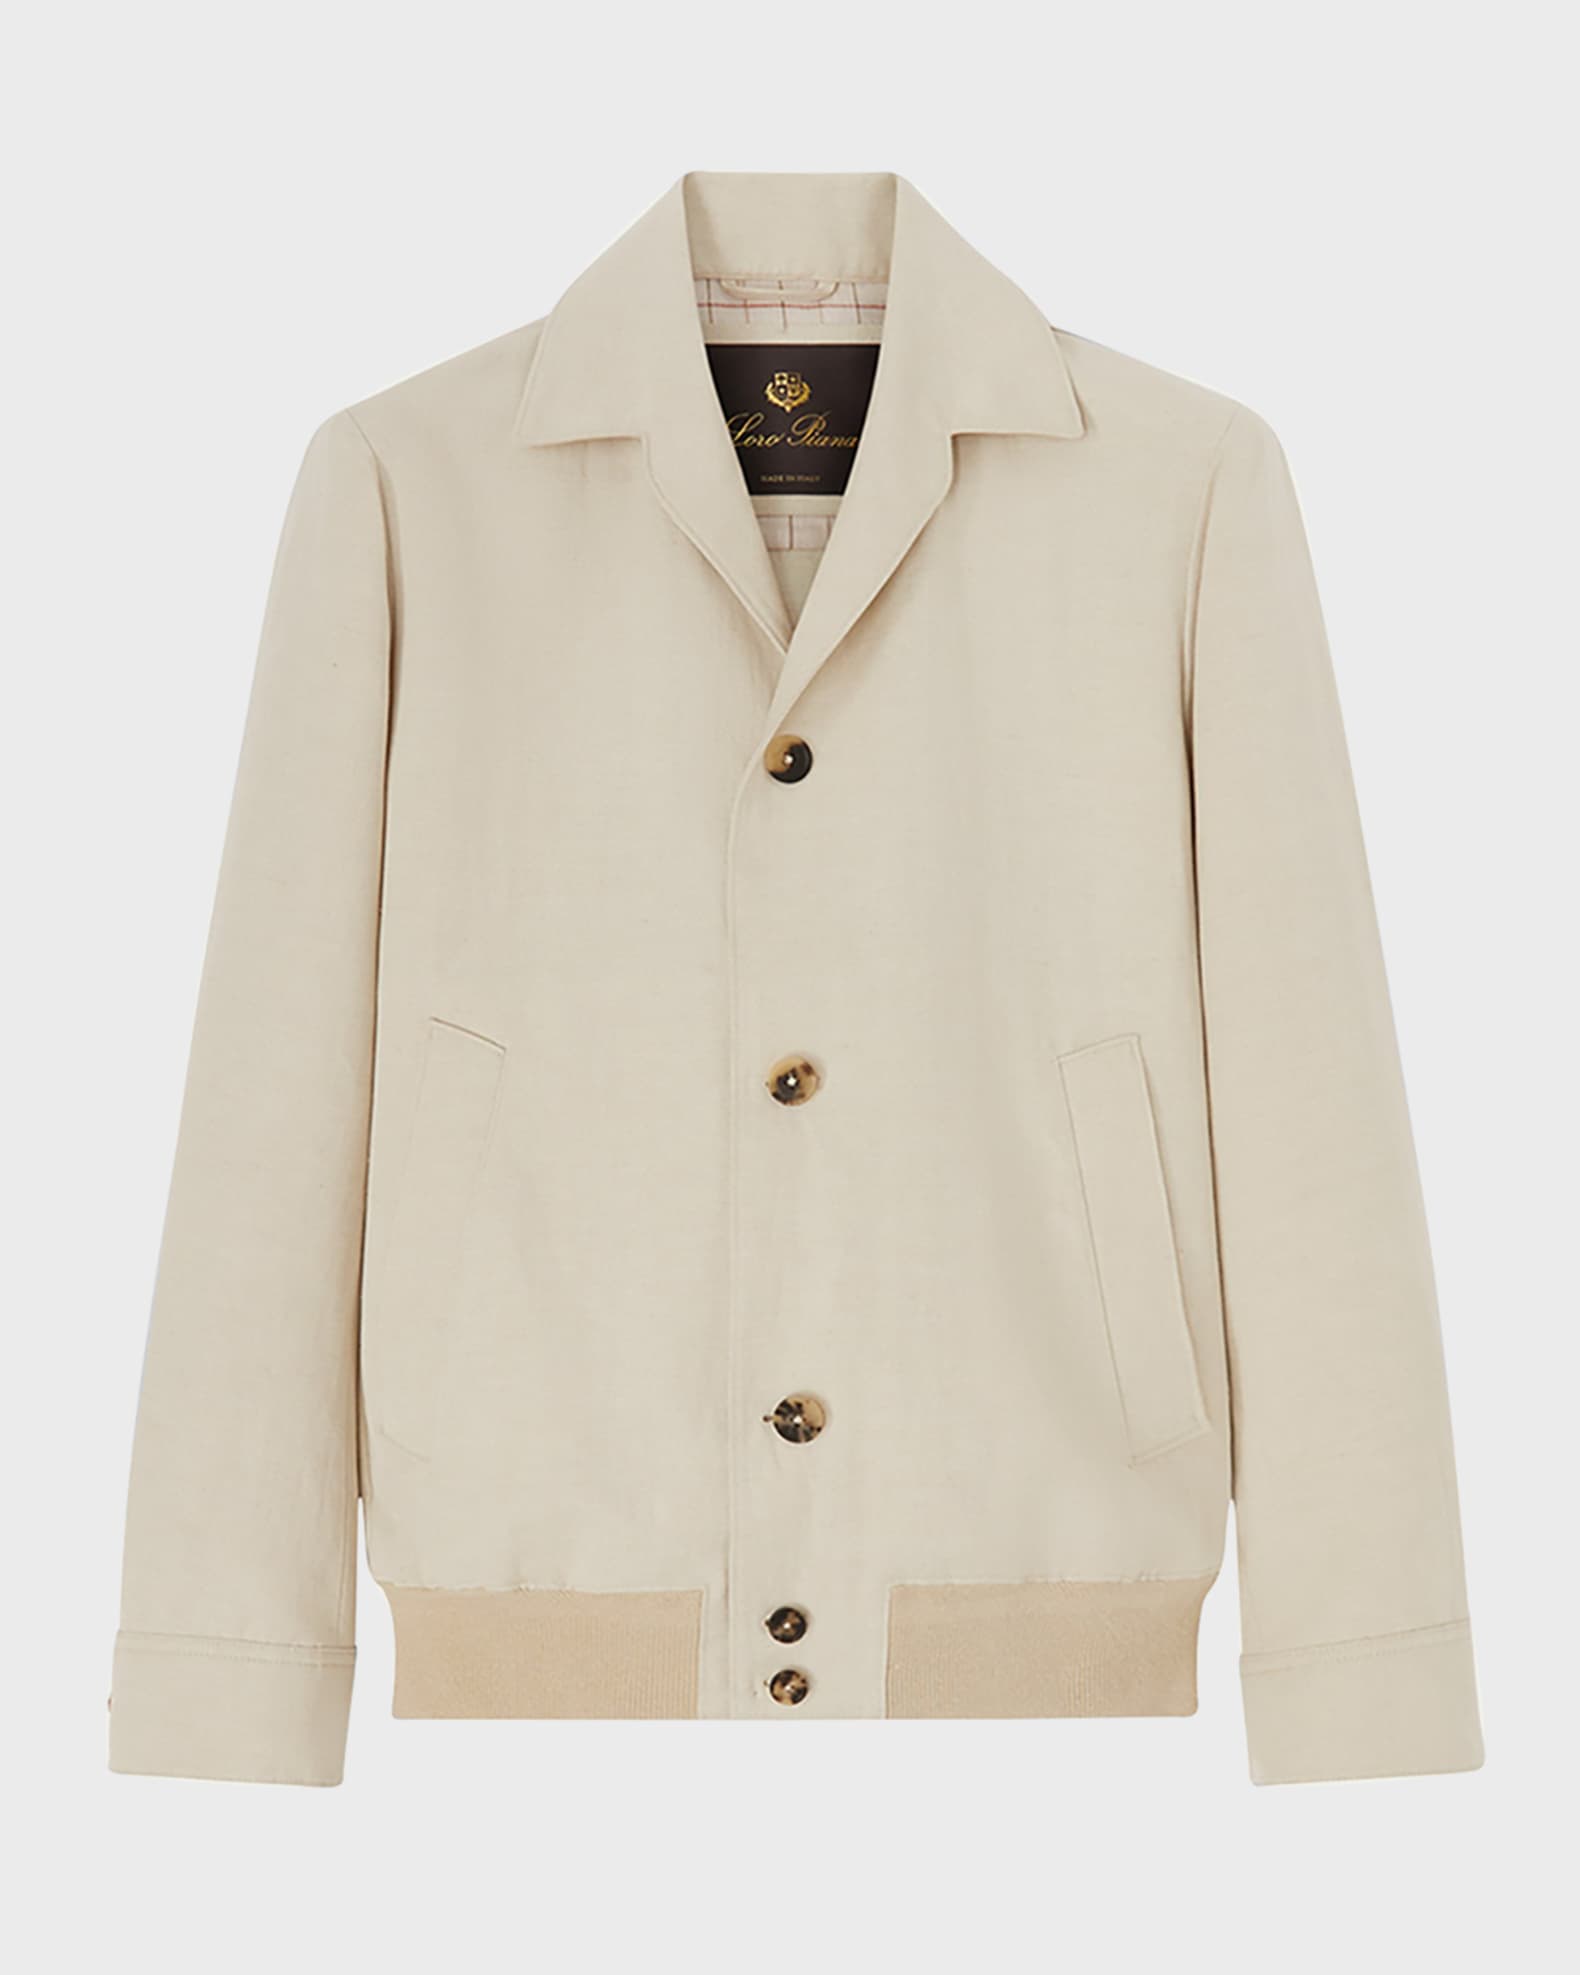 LOUIS VUITTON bomber jacket / size L / ITALY, Cotton, wool, cashmere.